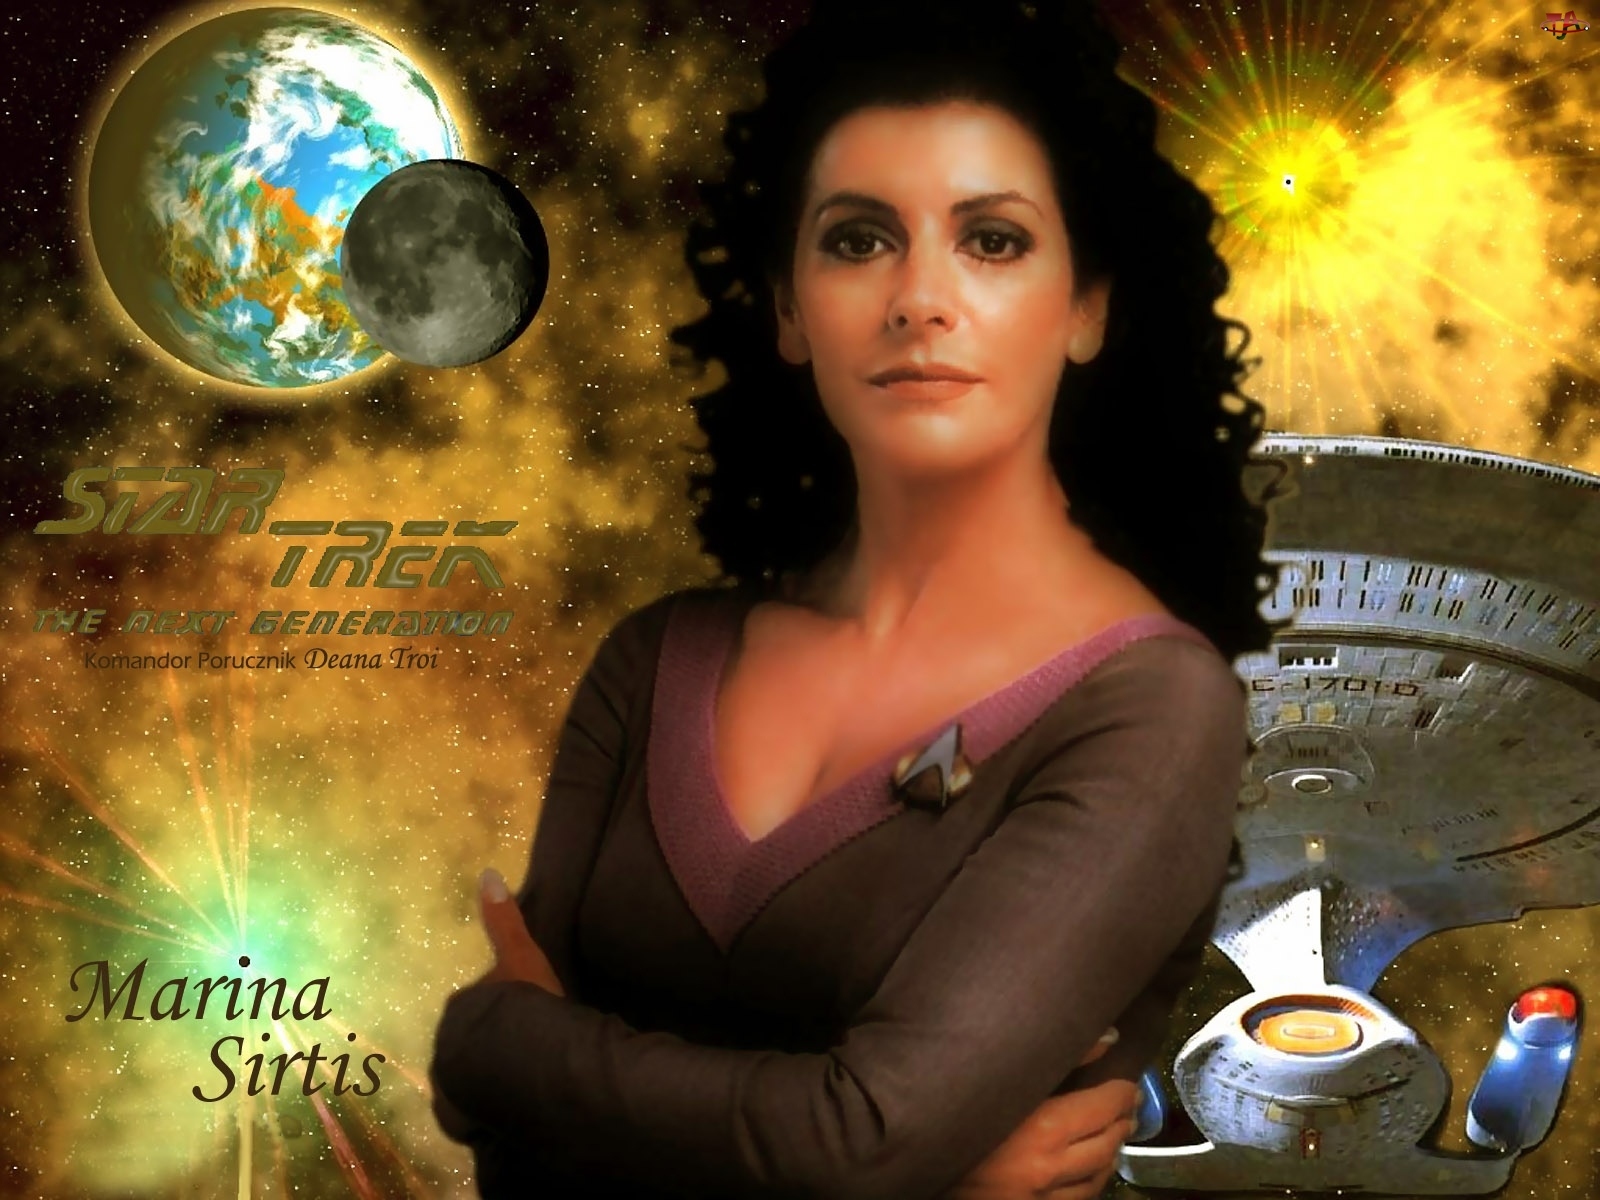 Star Trek The Next Generation, Marina Sirtis